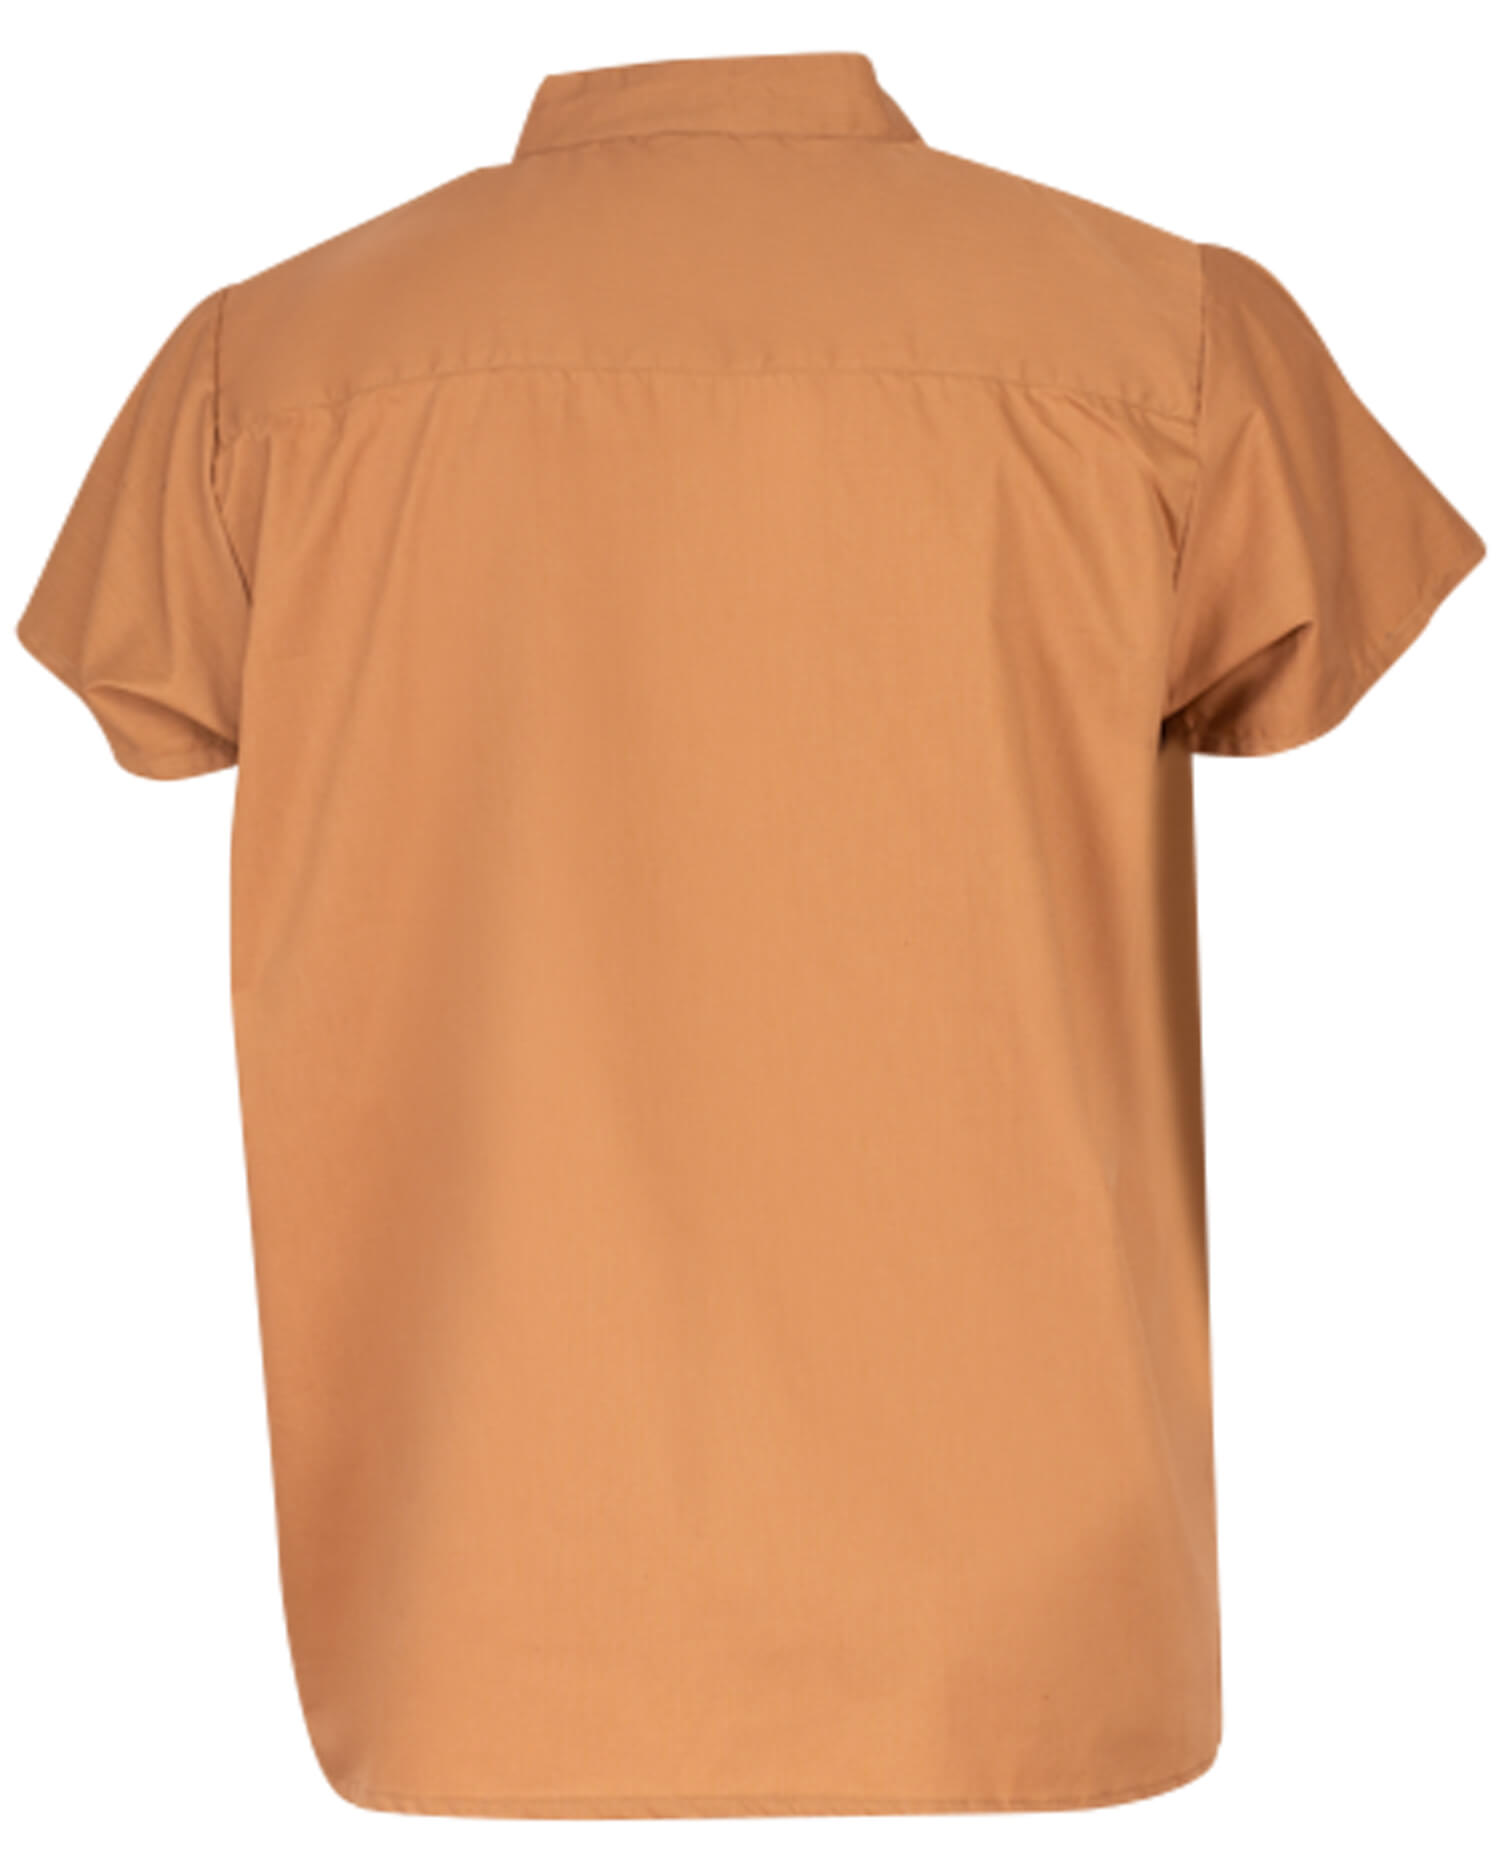 Bartold shirt short sleeve light cotton sand